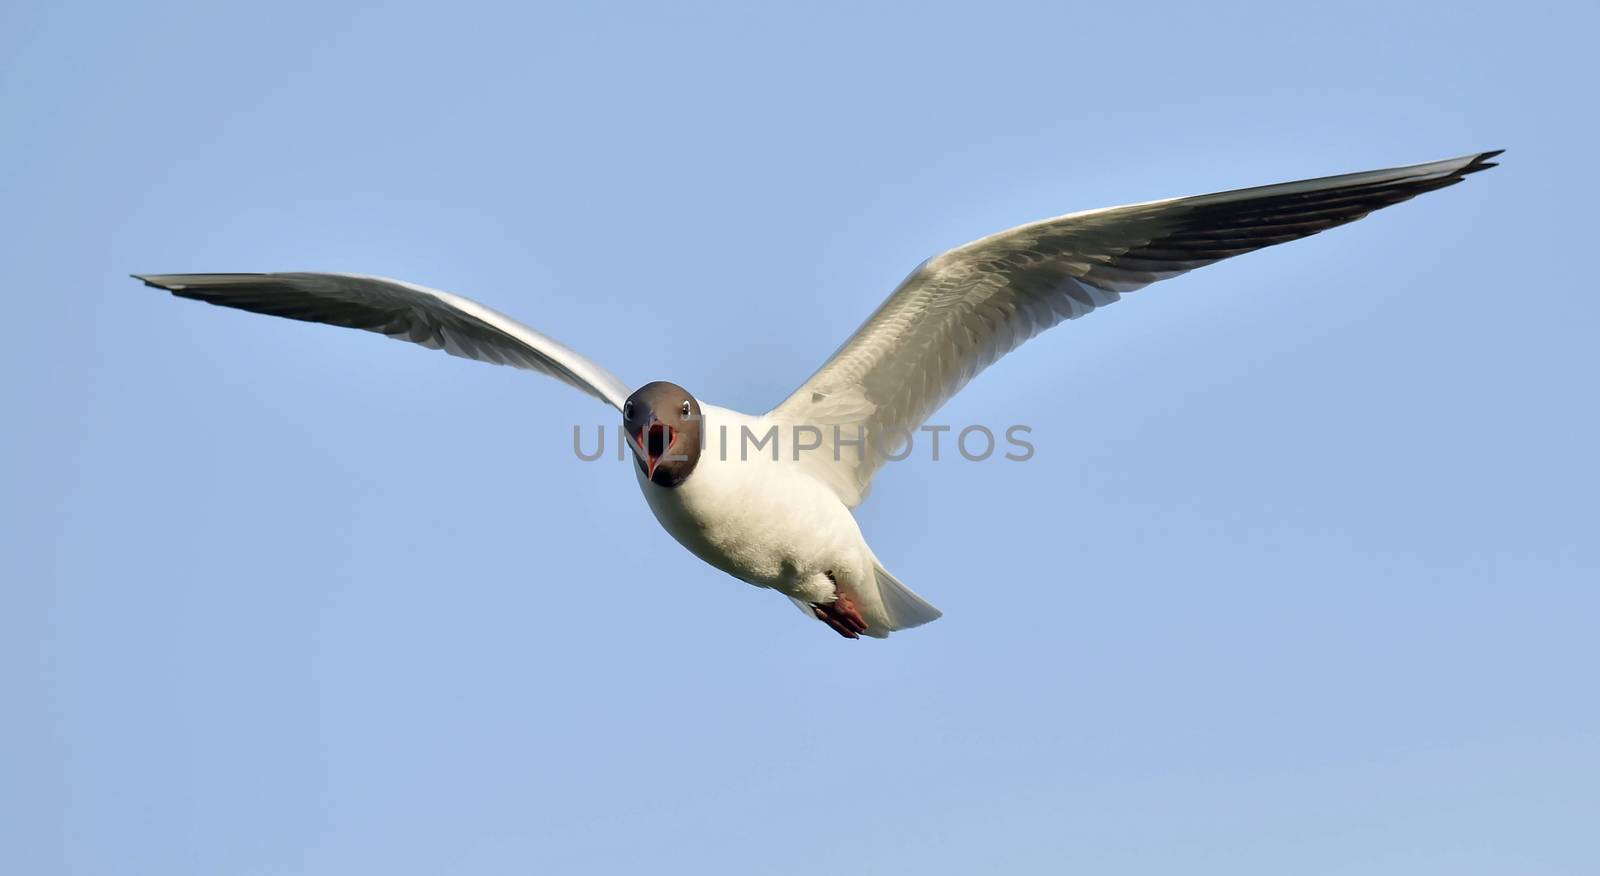 Black-headed Gull (Larus ridibundus) in flight on the sky background. Front